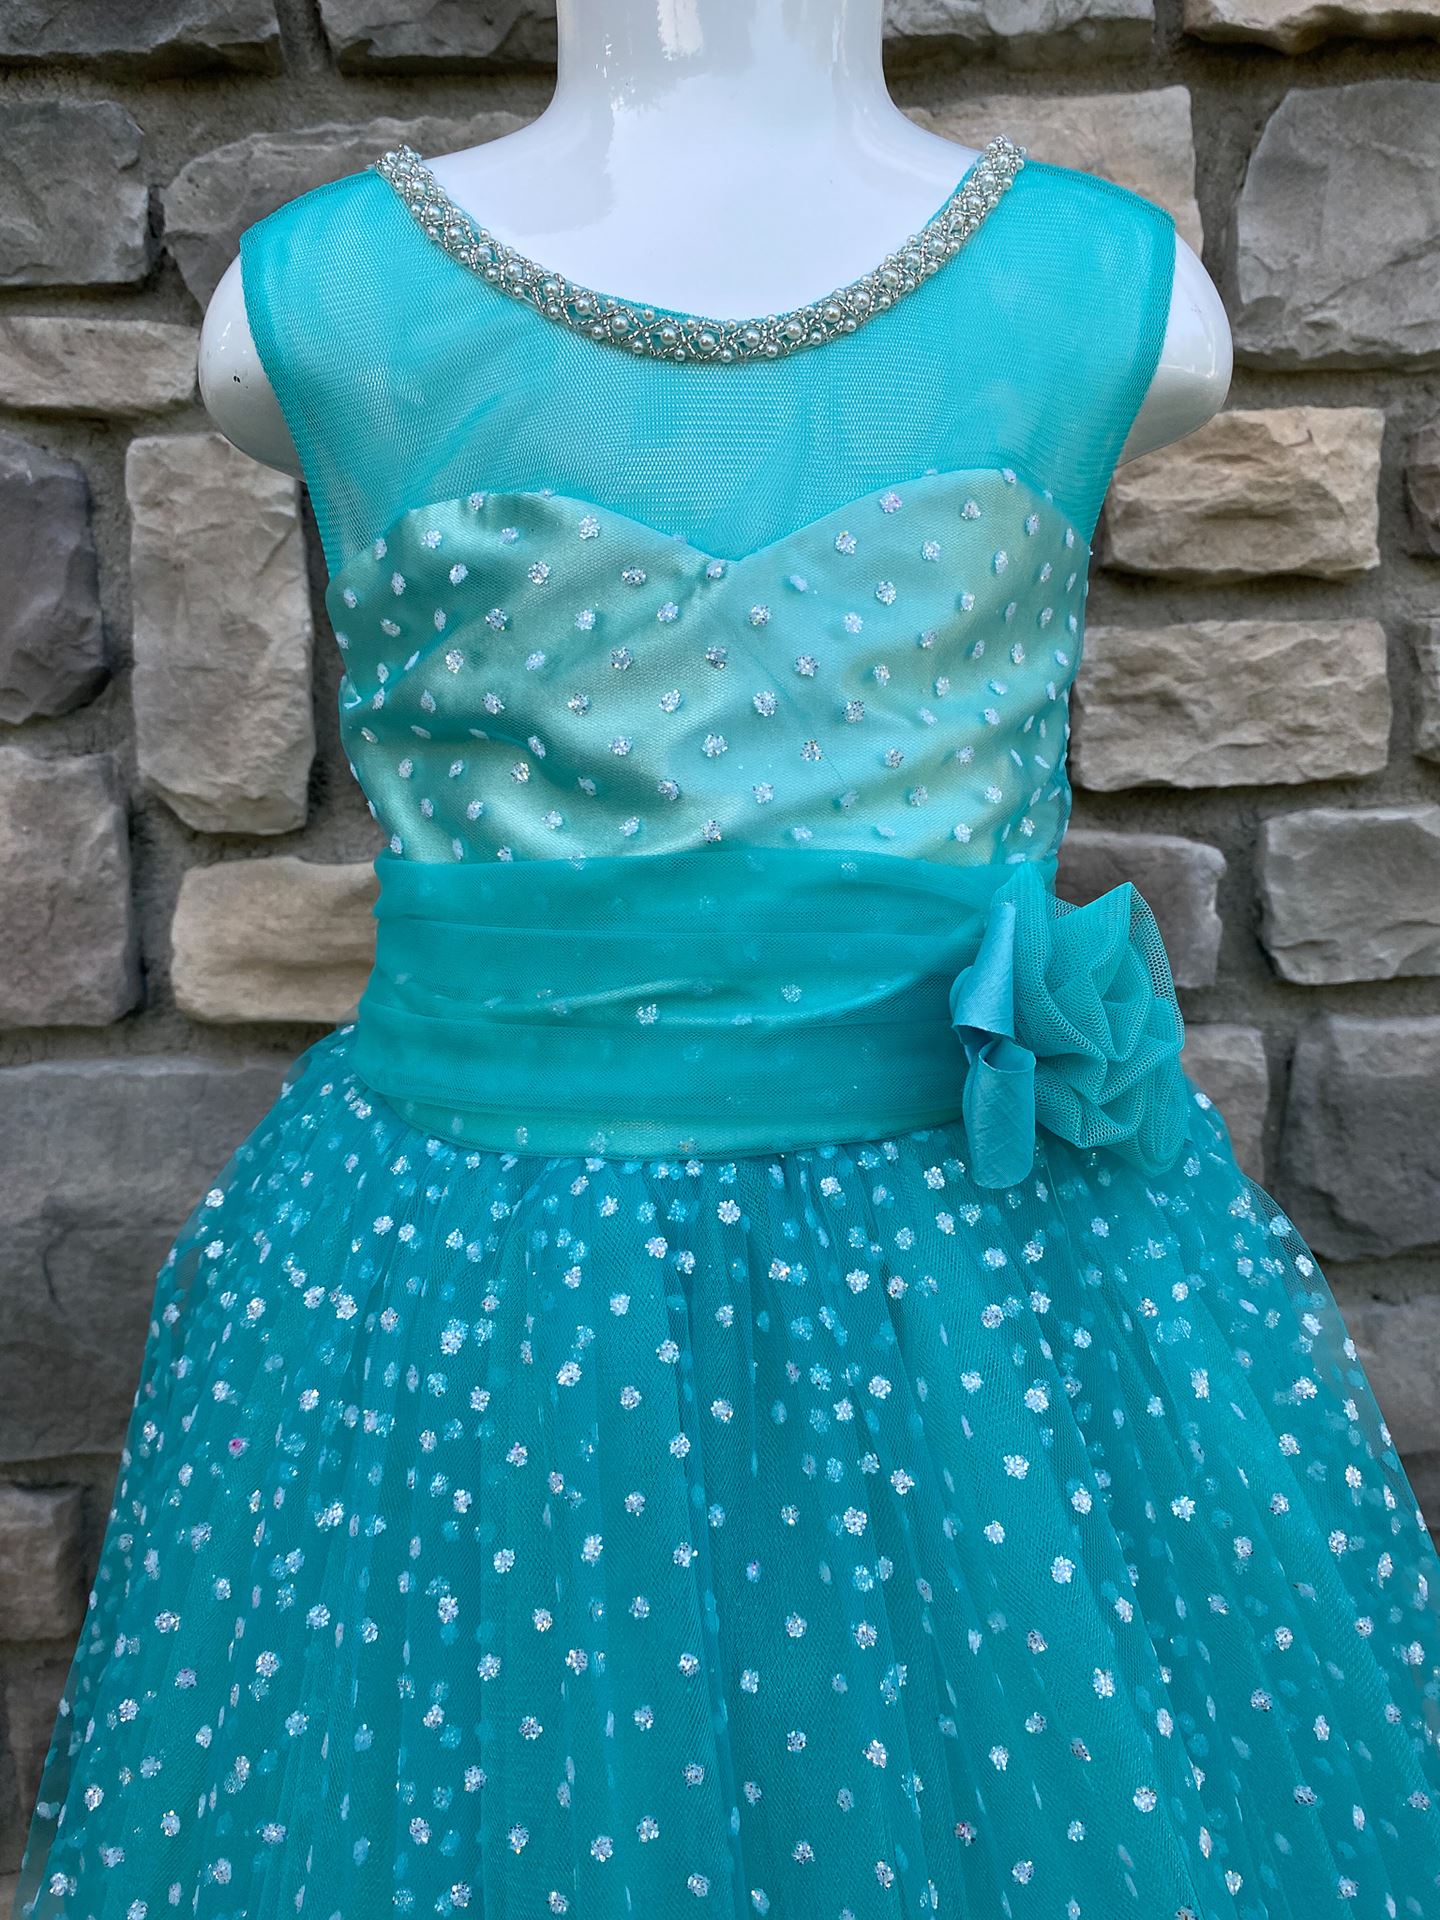 Skye 3-7 Years Old Girl Dress 10001 Water Green